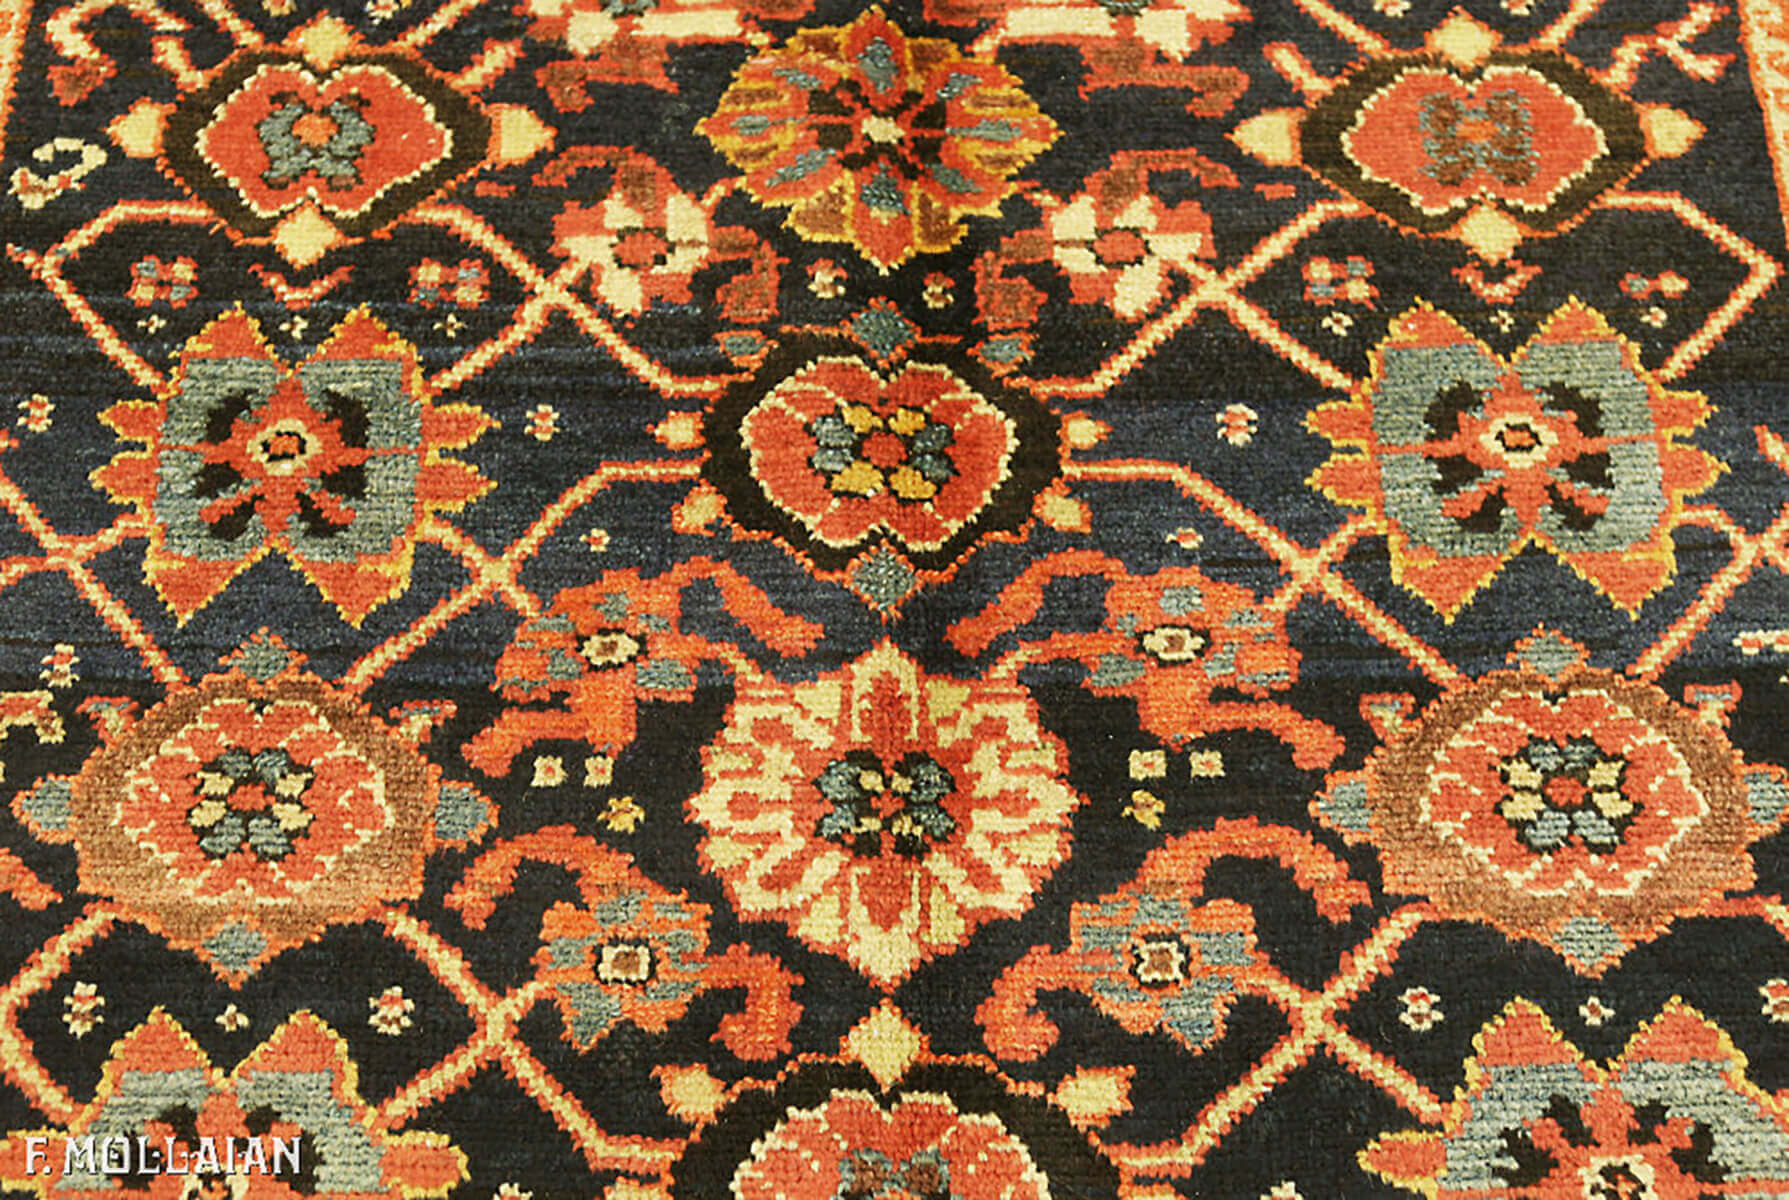 Antique Persian Malayer Carpet n°:95227491